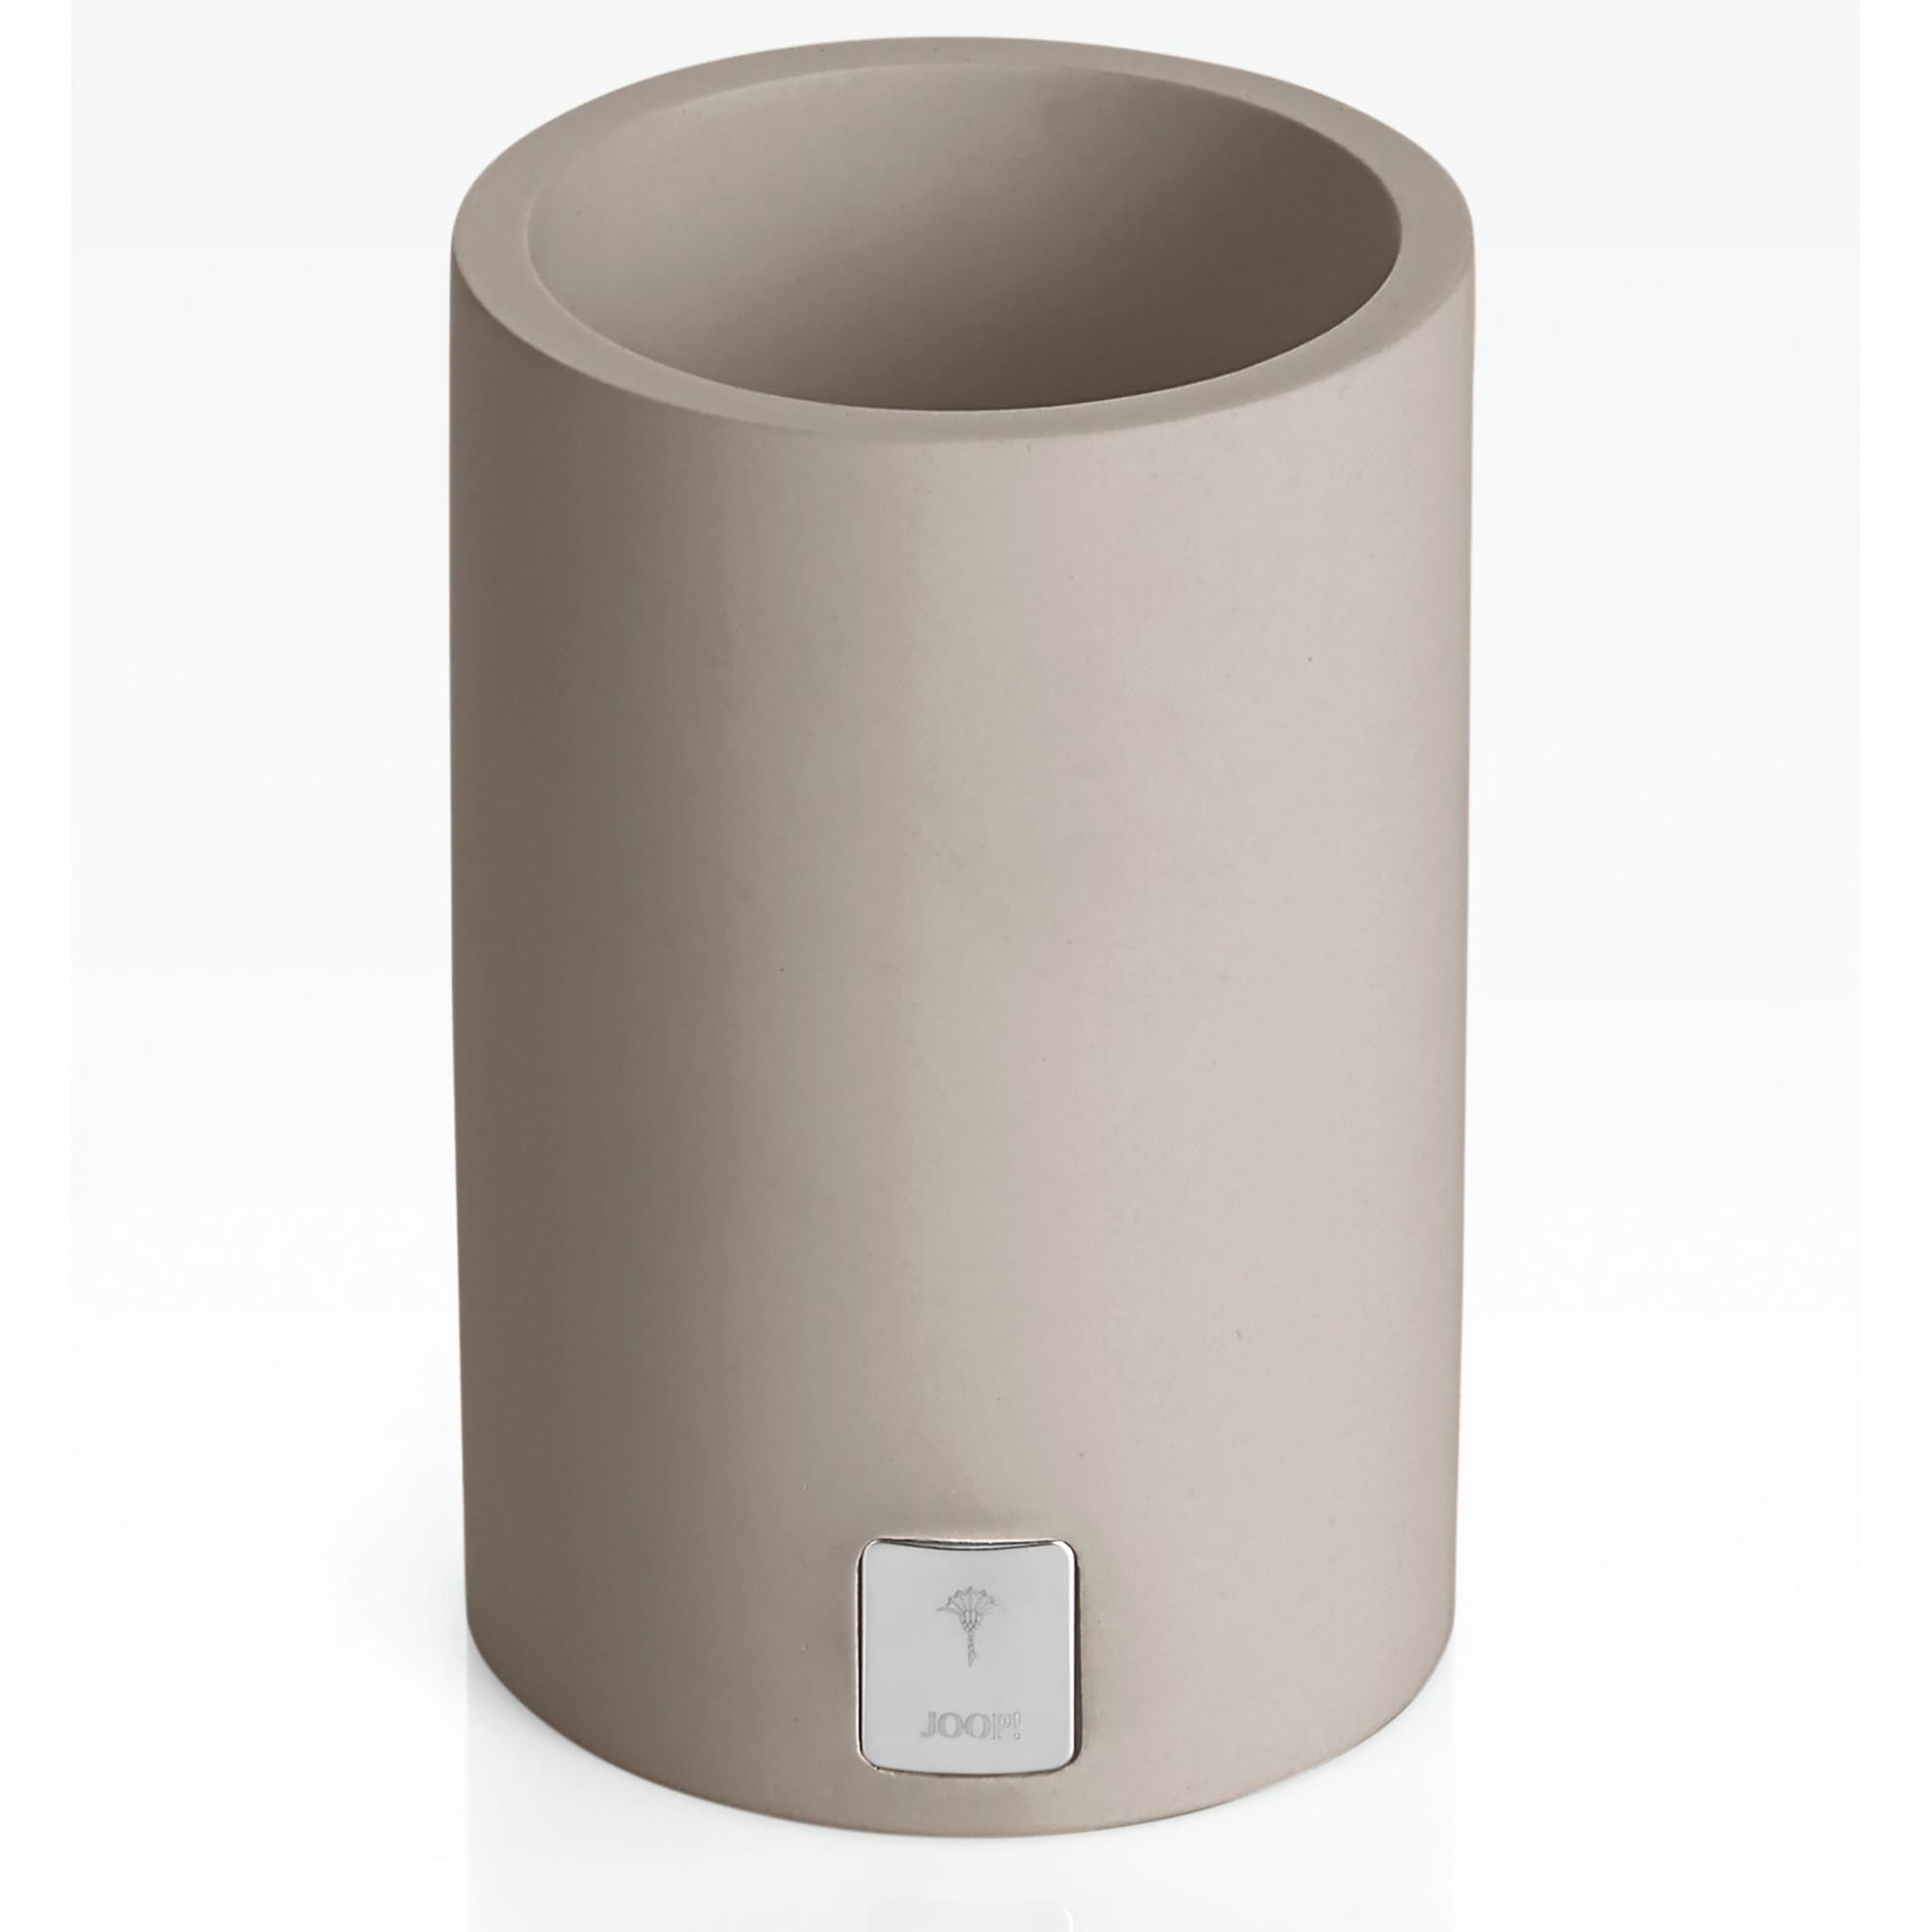 JOOP! BATHLINE - Behälter rund - Farbe: grau (011041413) - 11 cm |  Bad-Accessoires